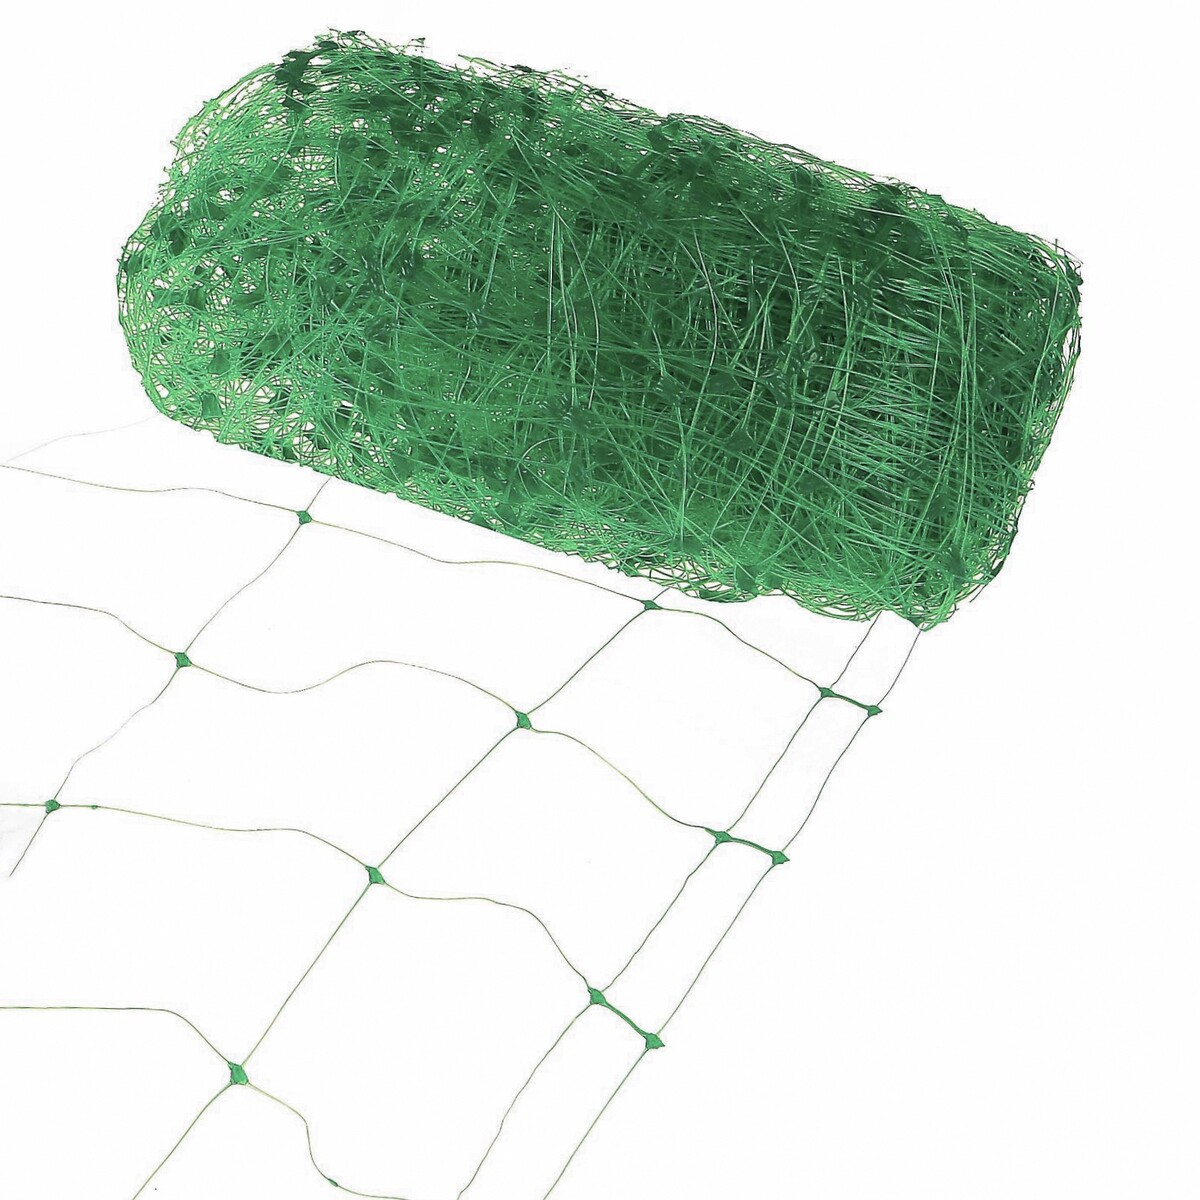 Сетка садовая, шпалерная, 10 × 2 м, ячейка 15 × 15 см сетка садовая 1 5 × 5 м ячейка 15 × 15 мм пластиковая зелёная greengo